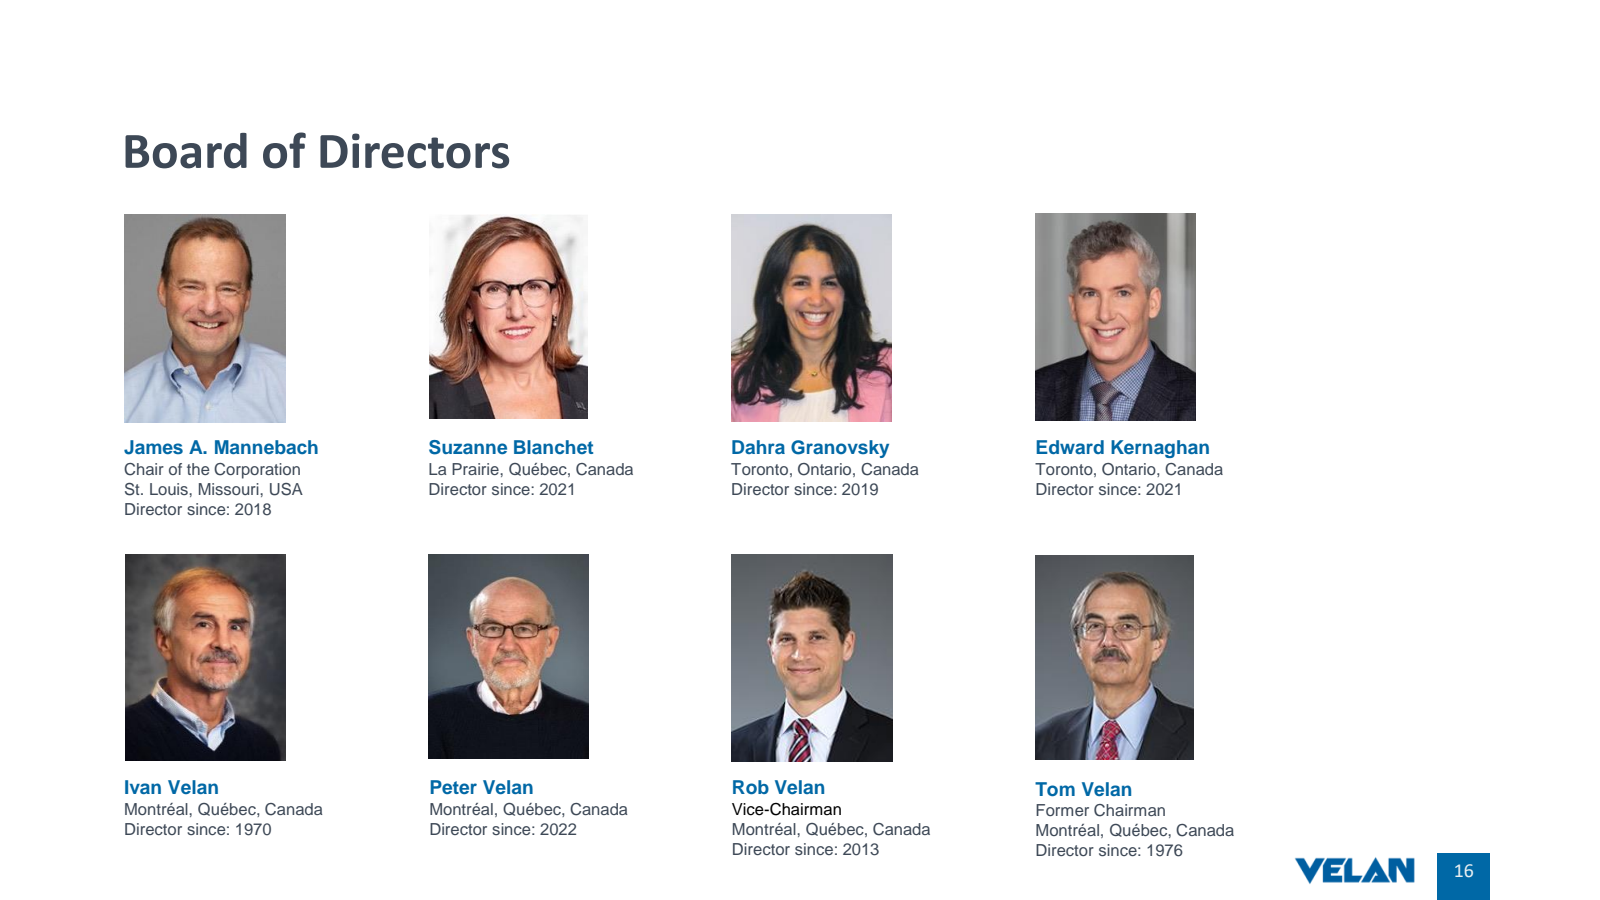 Board of Directors 
